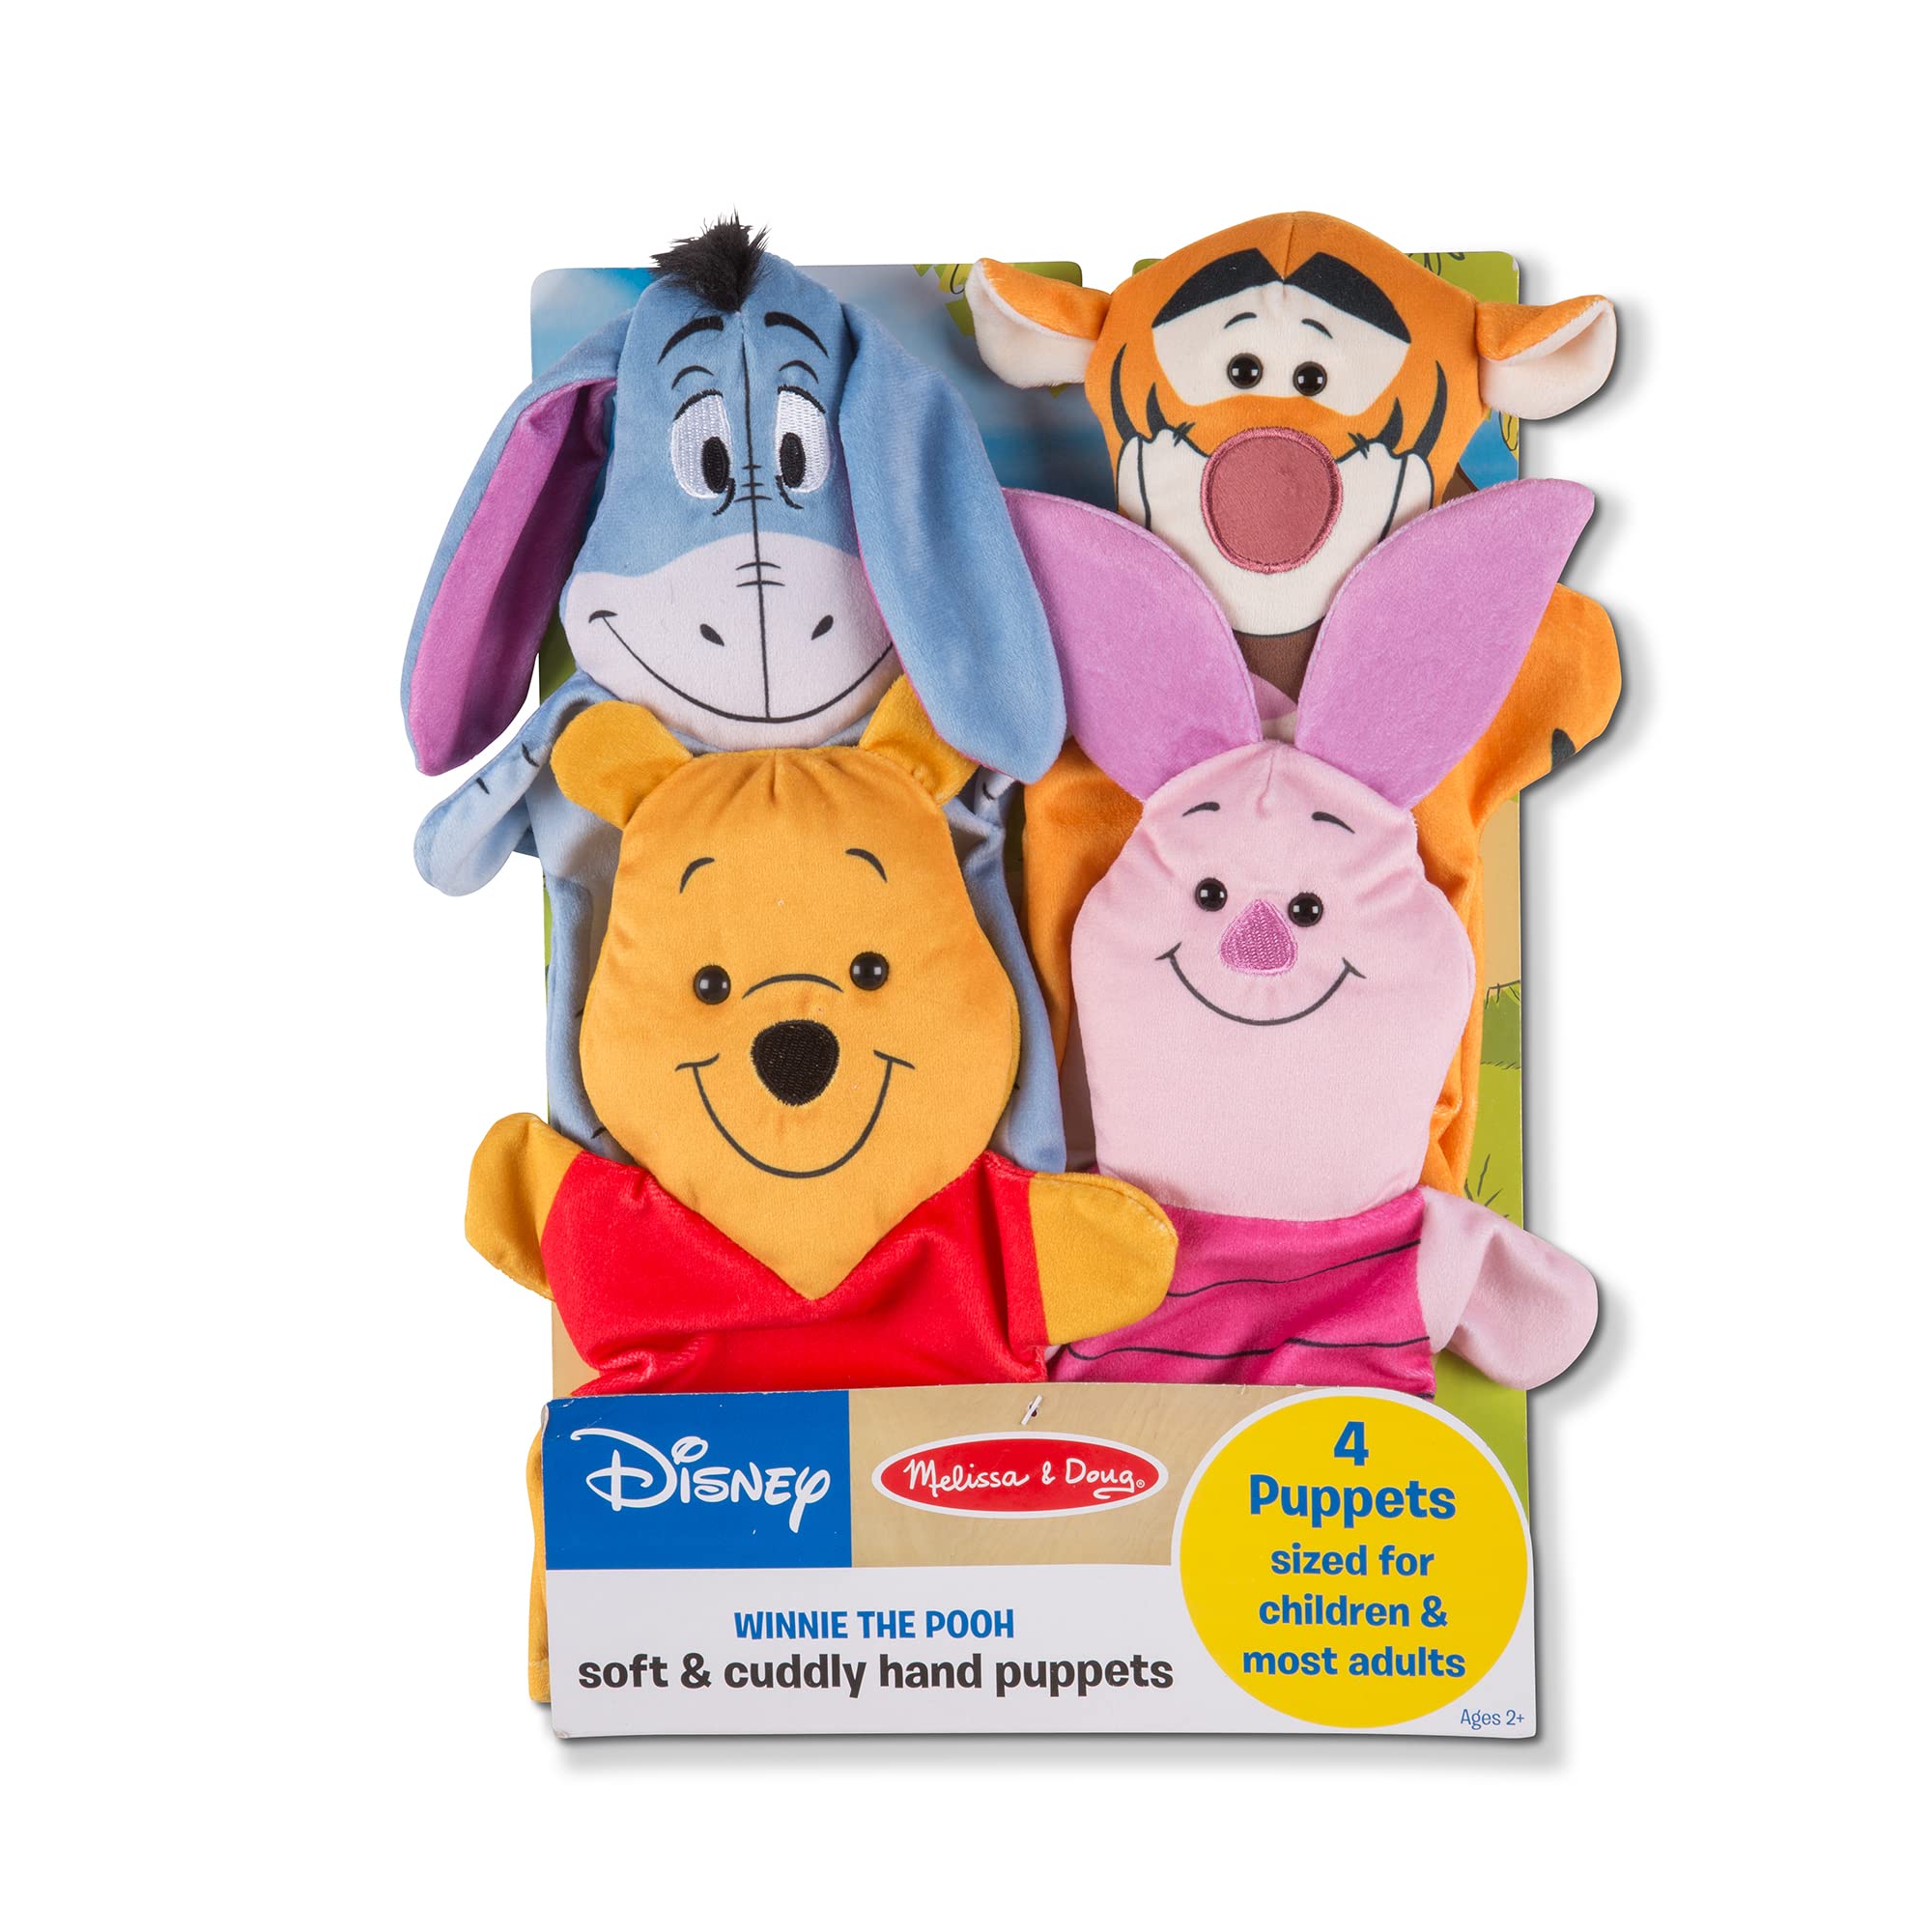 Melissa & Doug Disney Winnie the Pooh Soft & Cuddly Hand Puppets - Winnie The Pooh Toys, Soft Hand Puppets For Kids Ages 2+